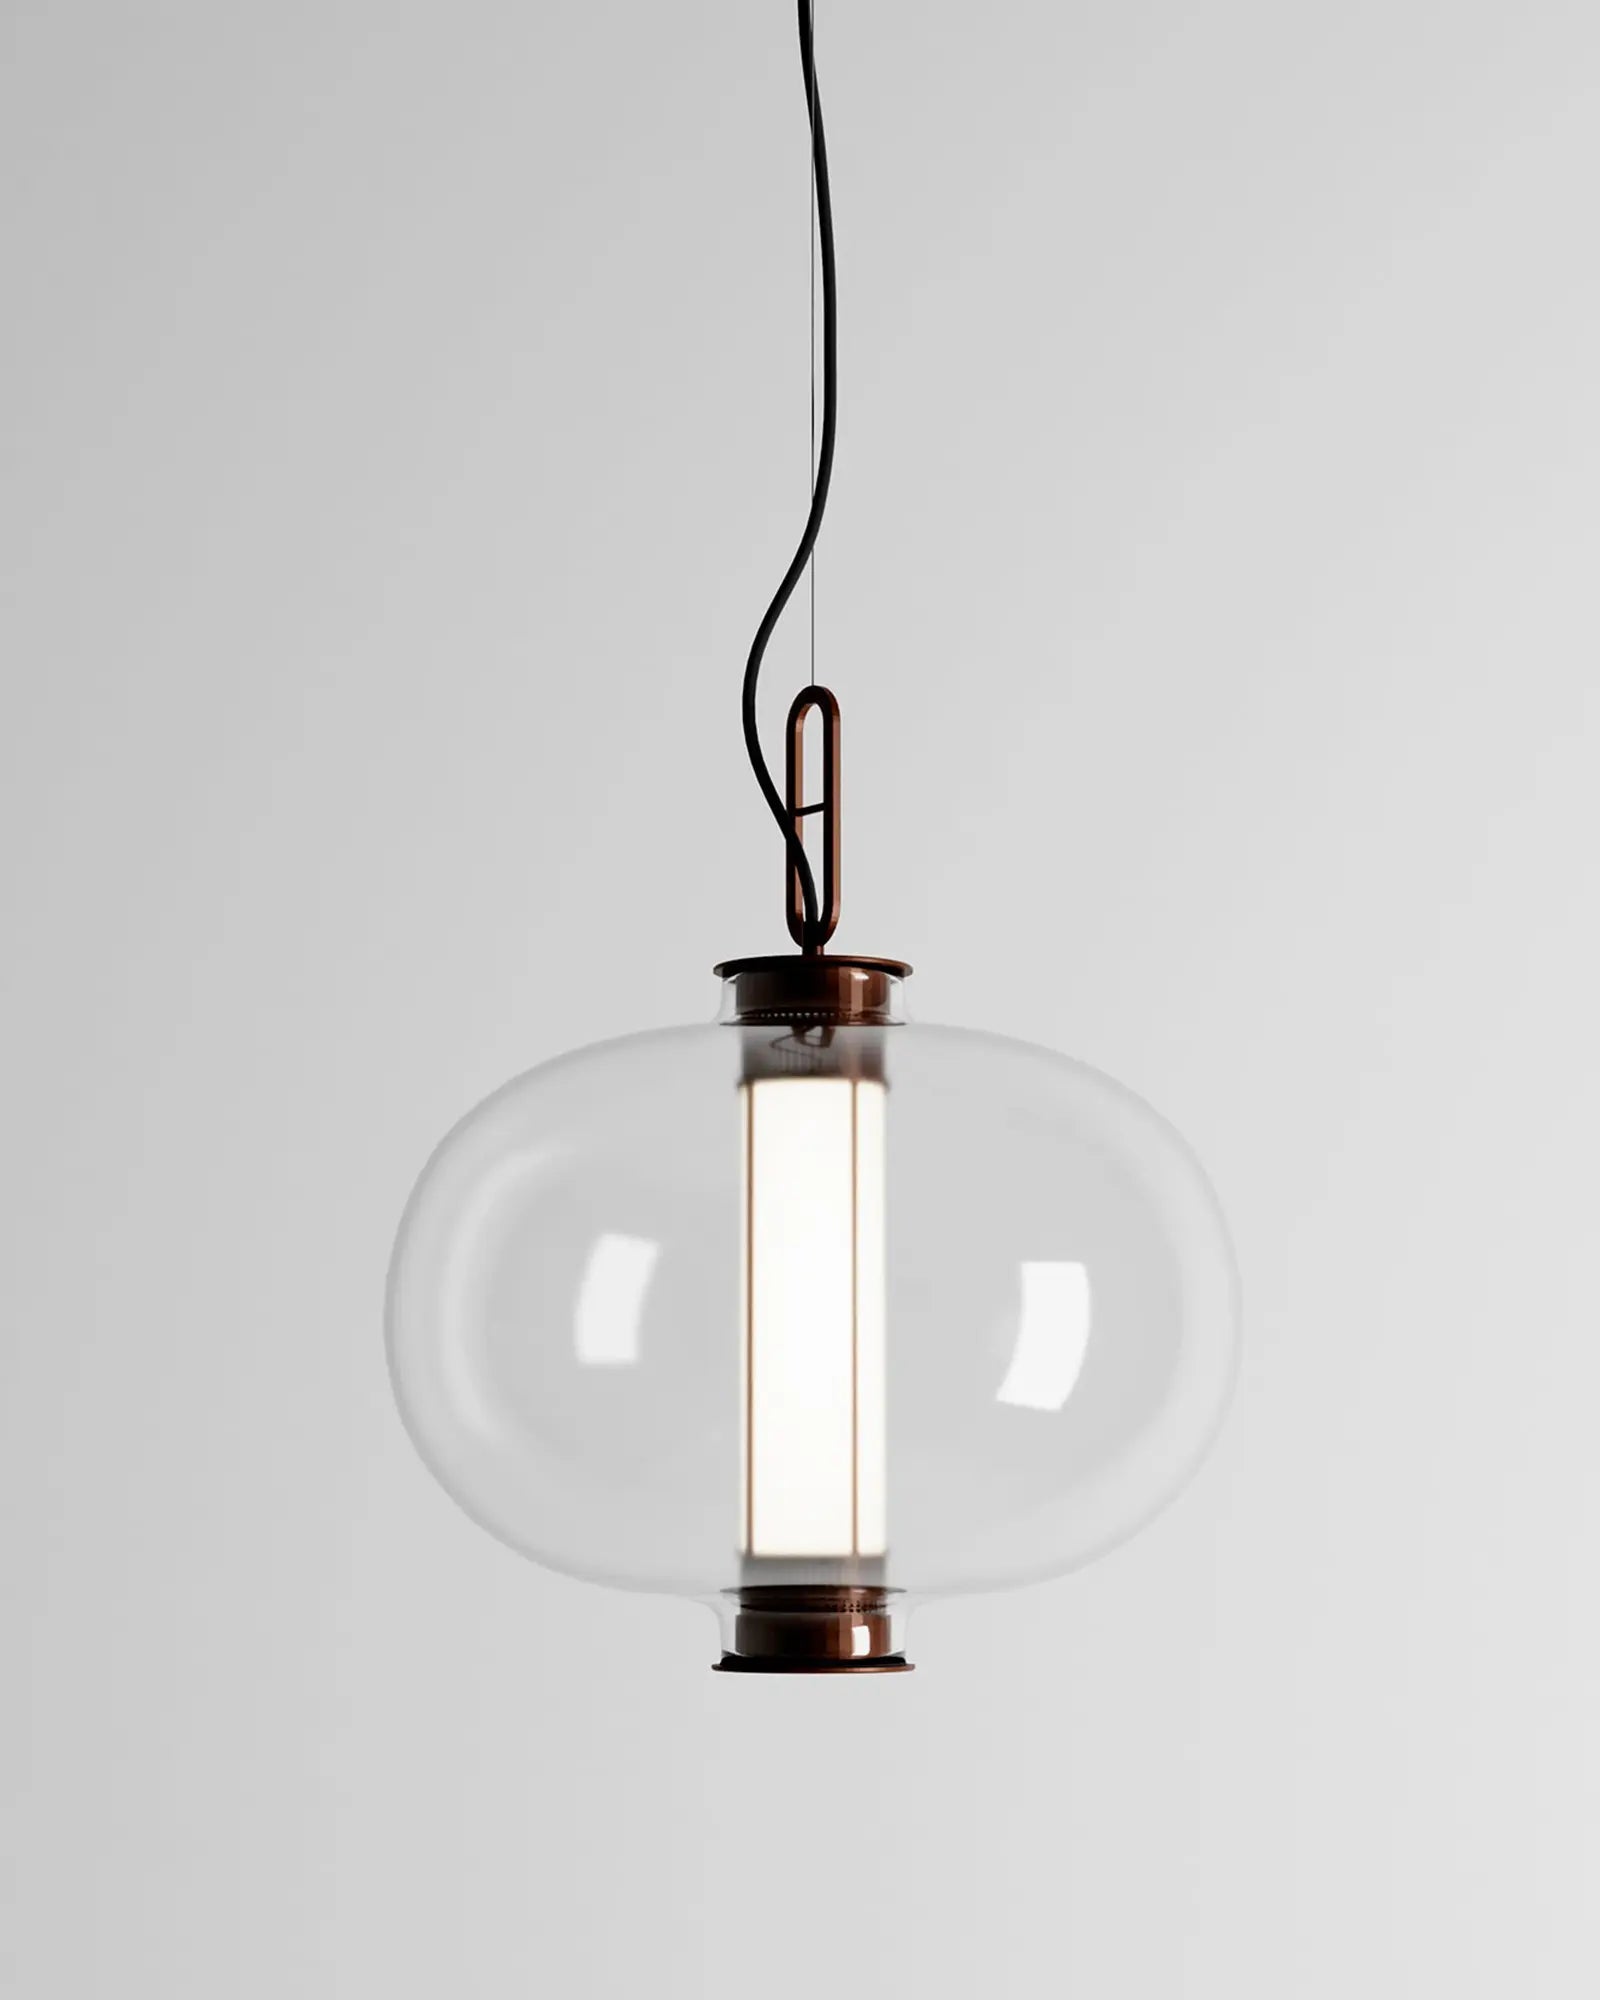 Bai Ma Ma Chinese inspired large lantern style pendant light transparent glass